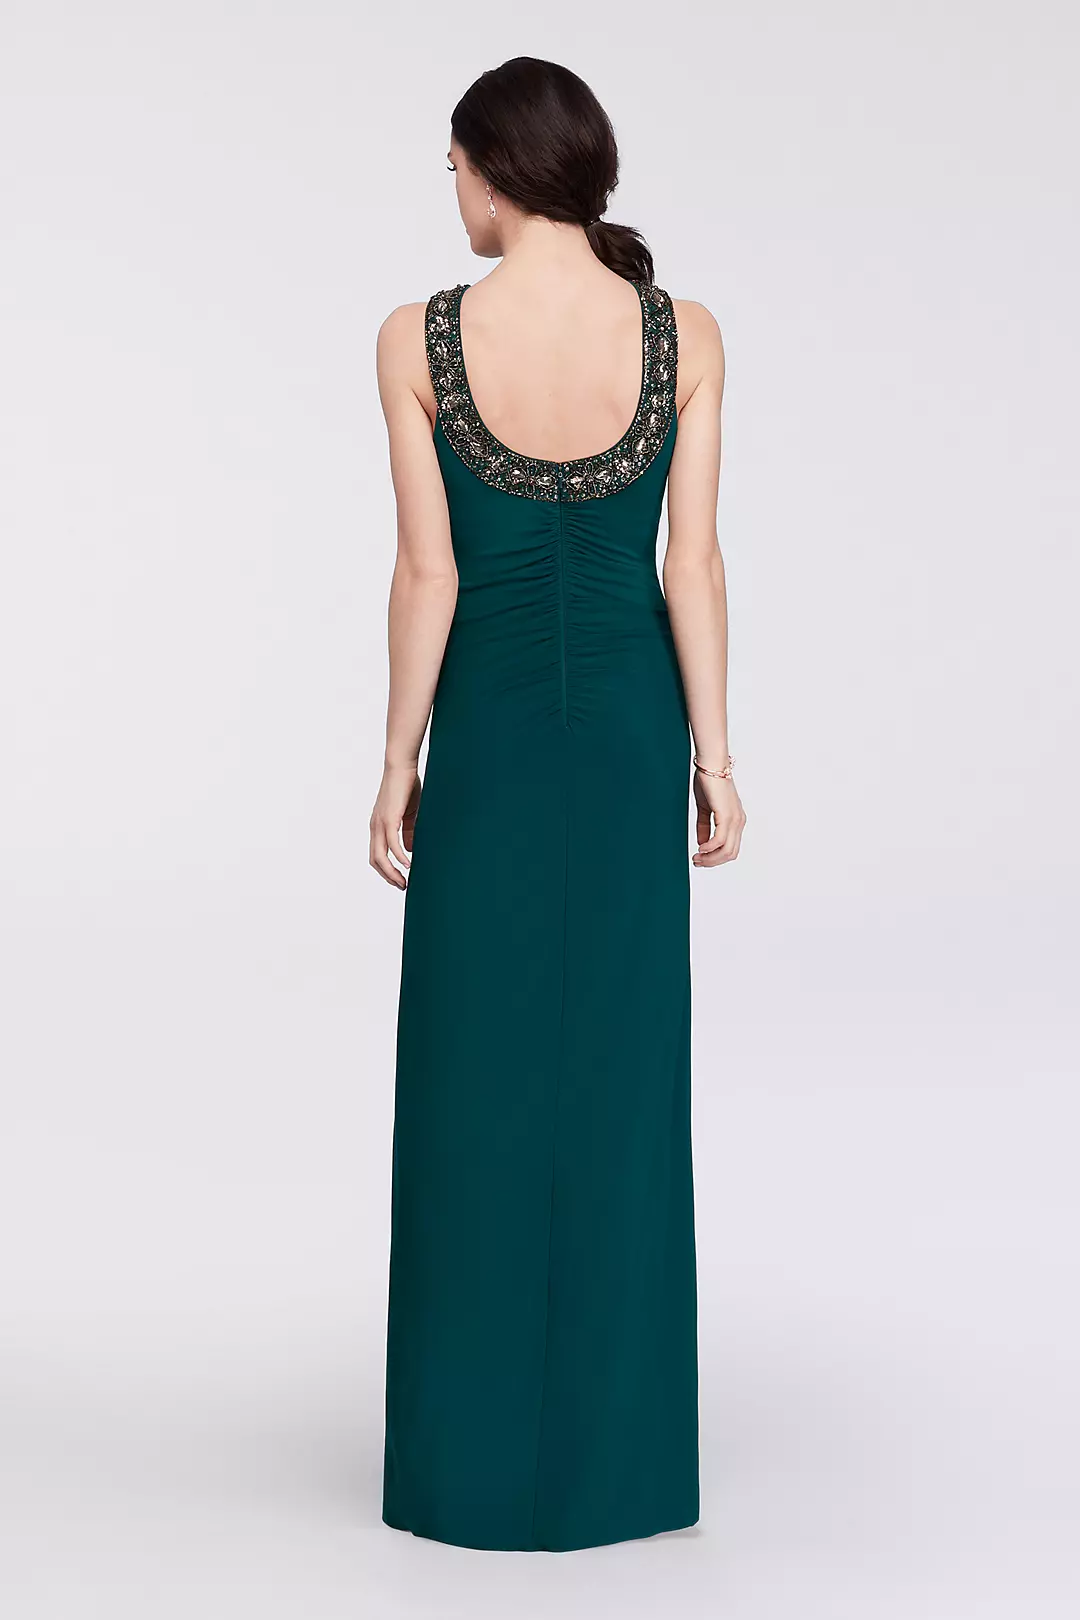 Long Halter Dress with Beaded Neckline Image 2